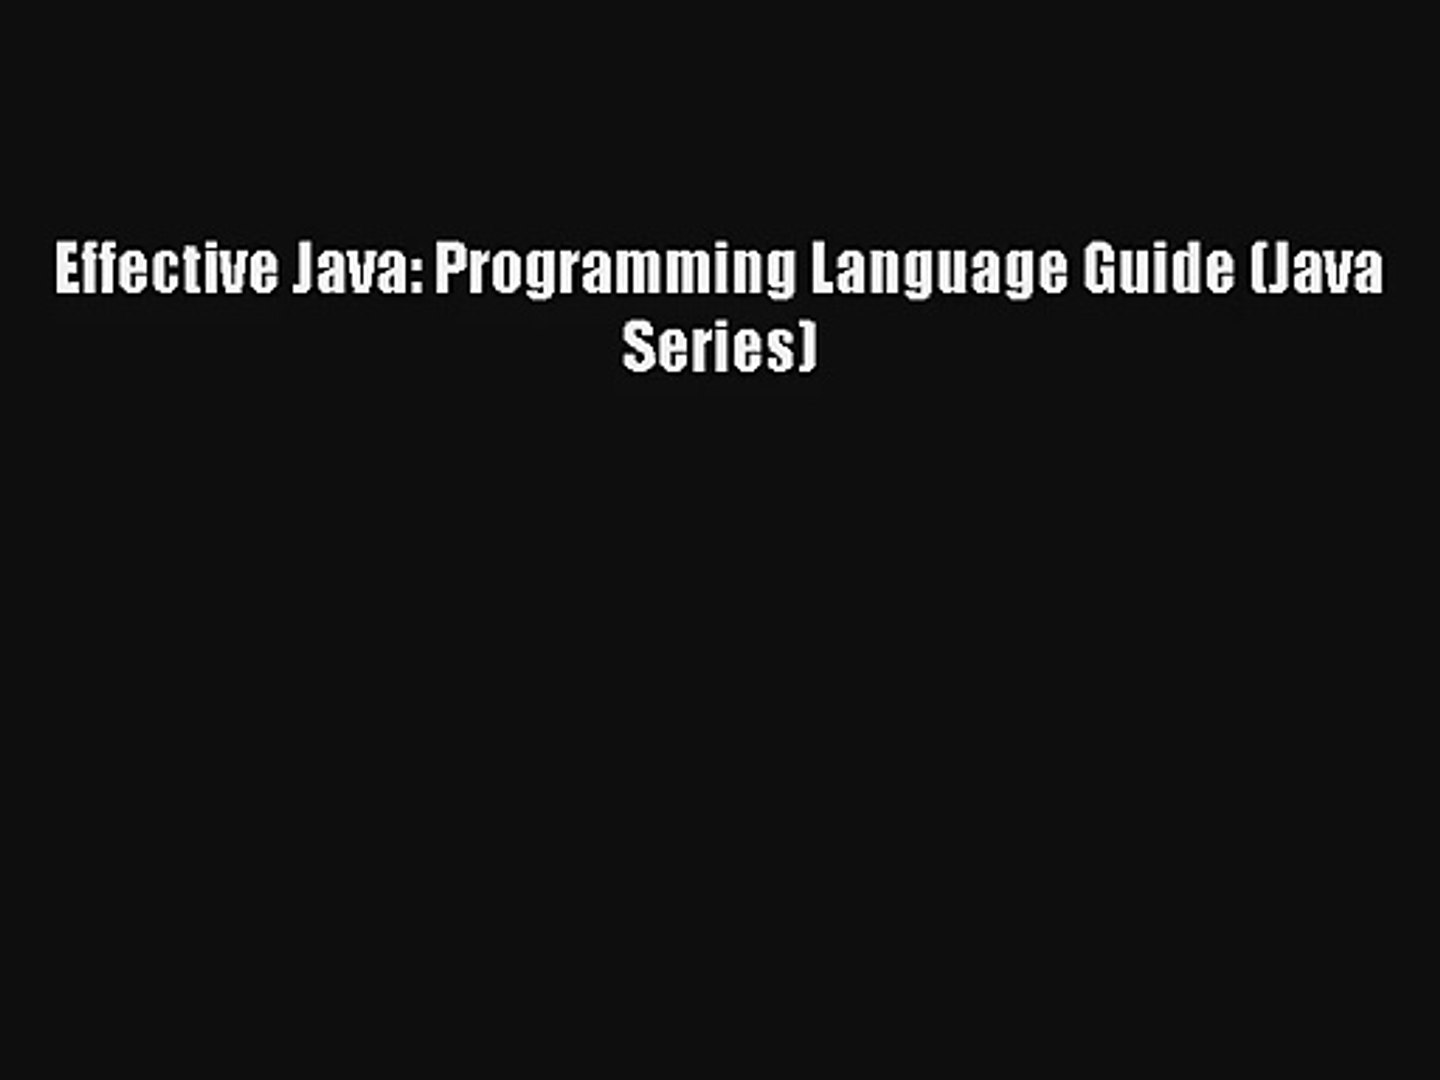 Effective Java: Programming Language Guide (Java Series) Download Free